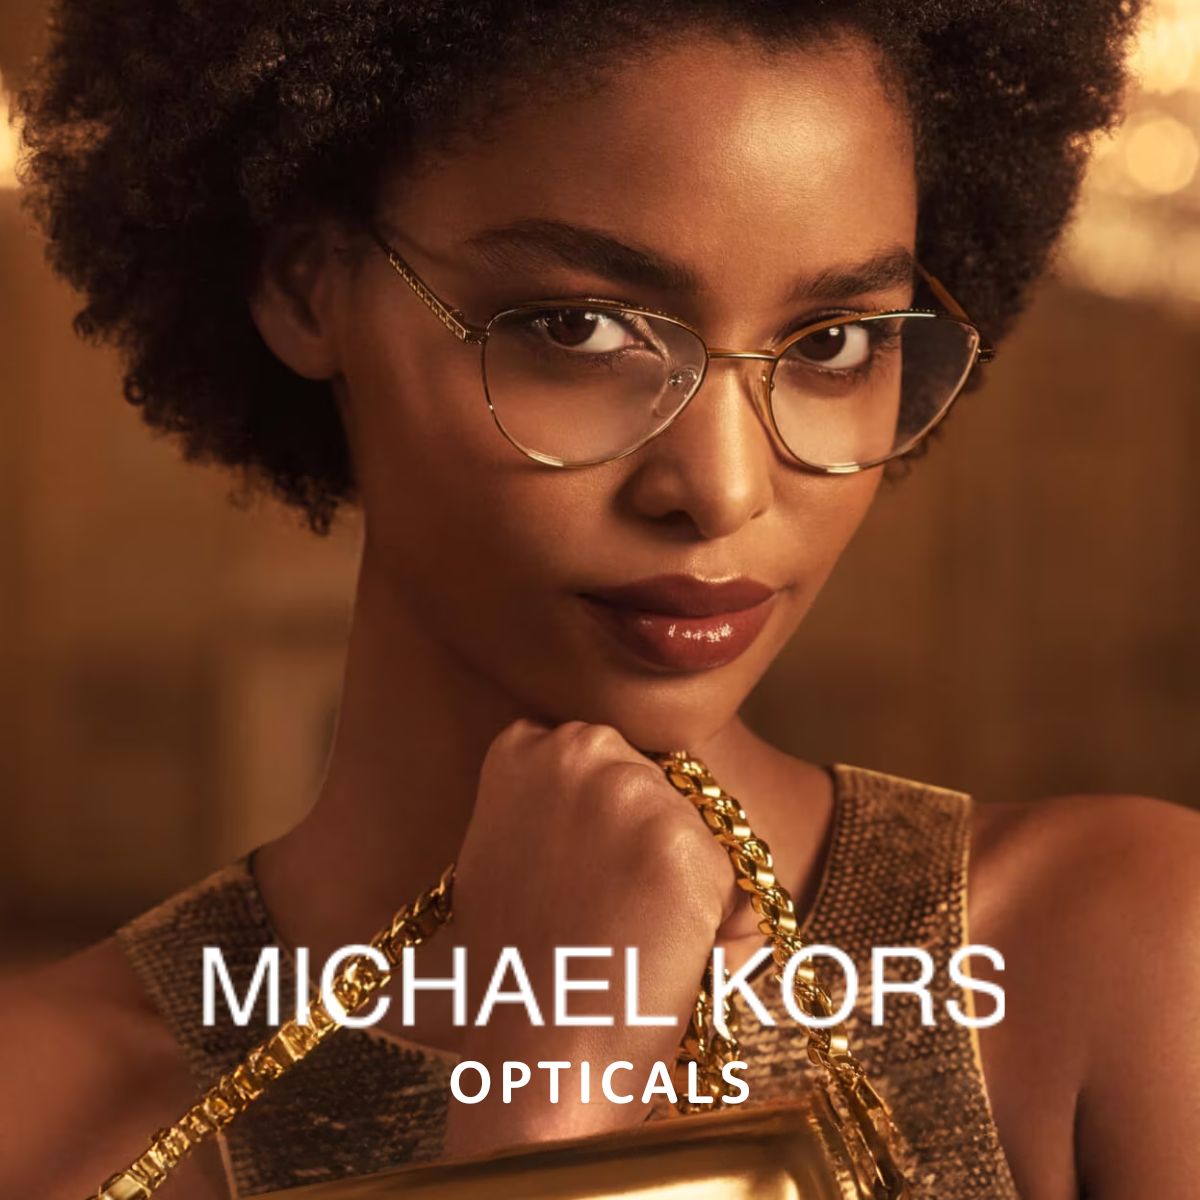 "Stylish Glasses Frames - Michael Kors Optical Frames"